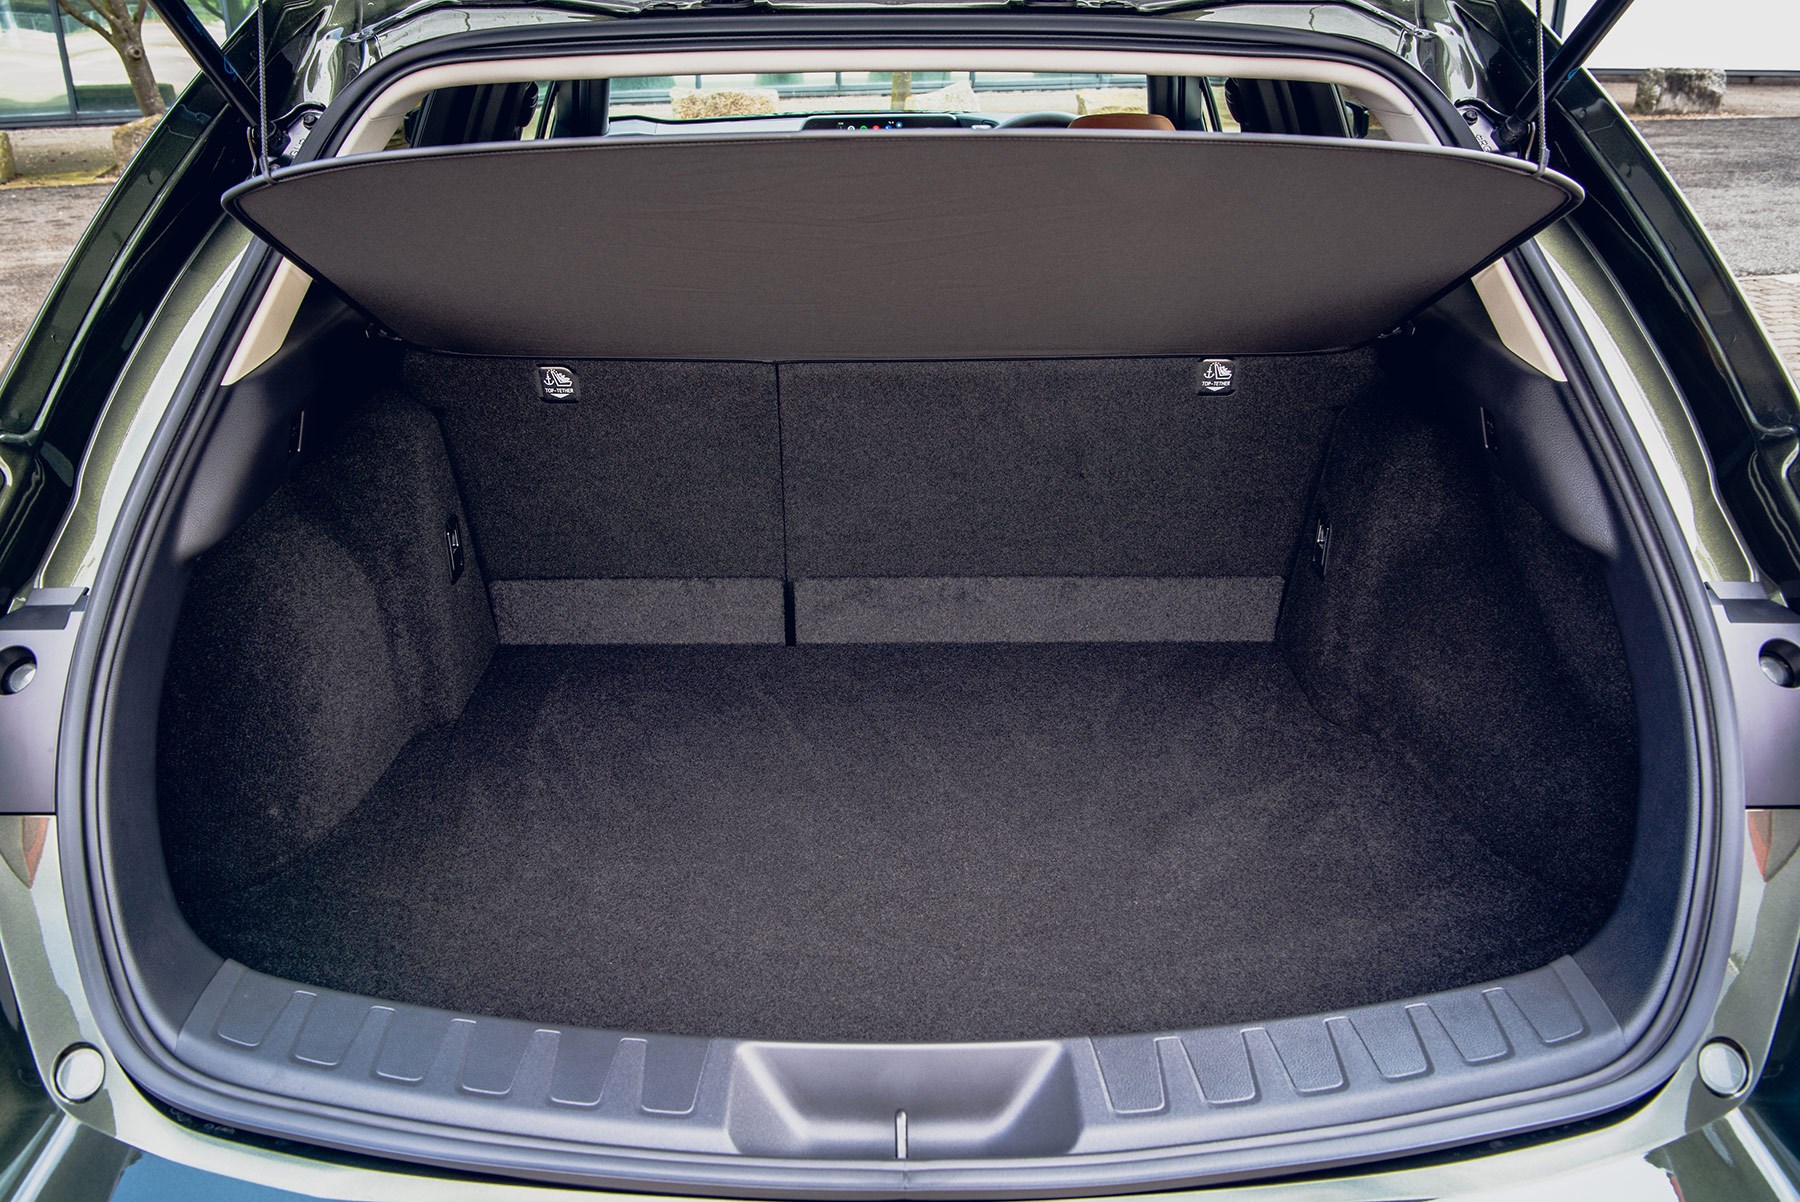 Lexus UX 300e boot: 367 litres of space